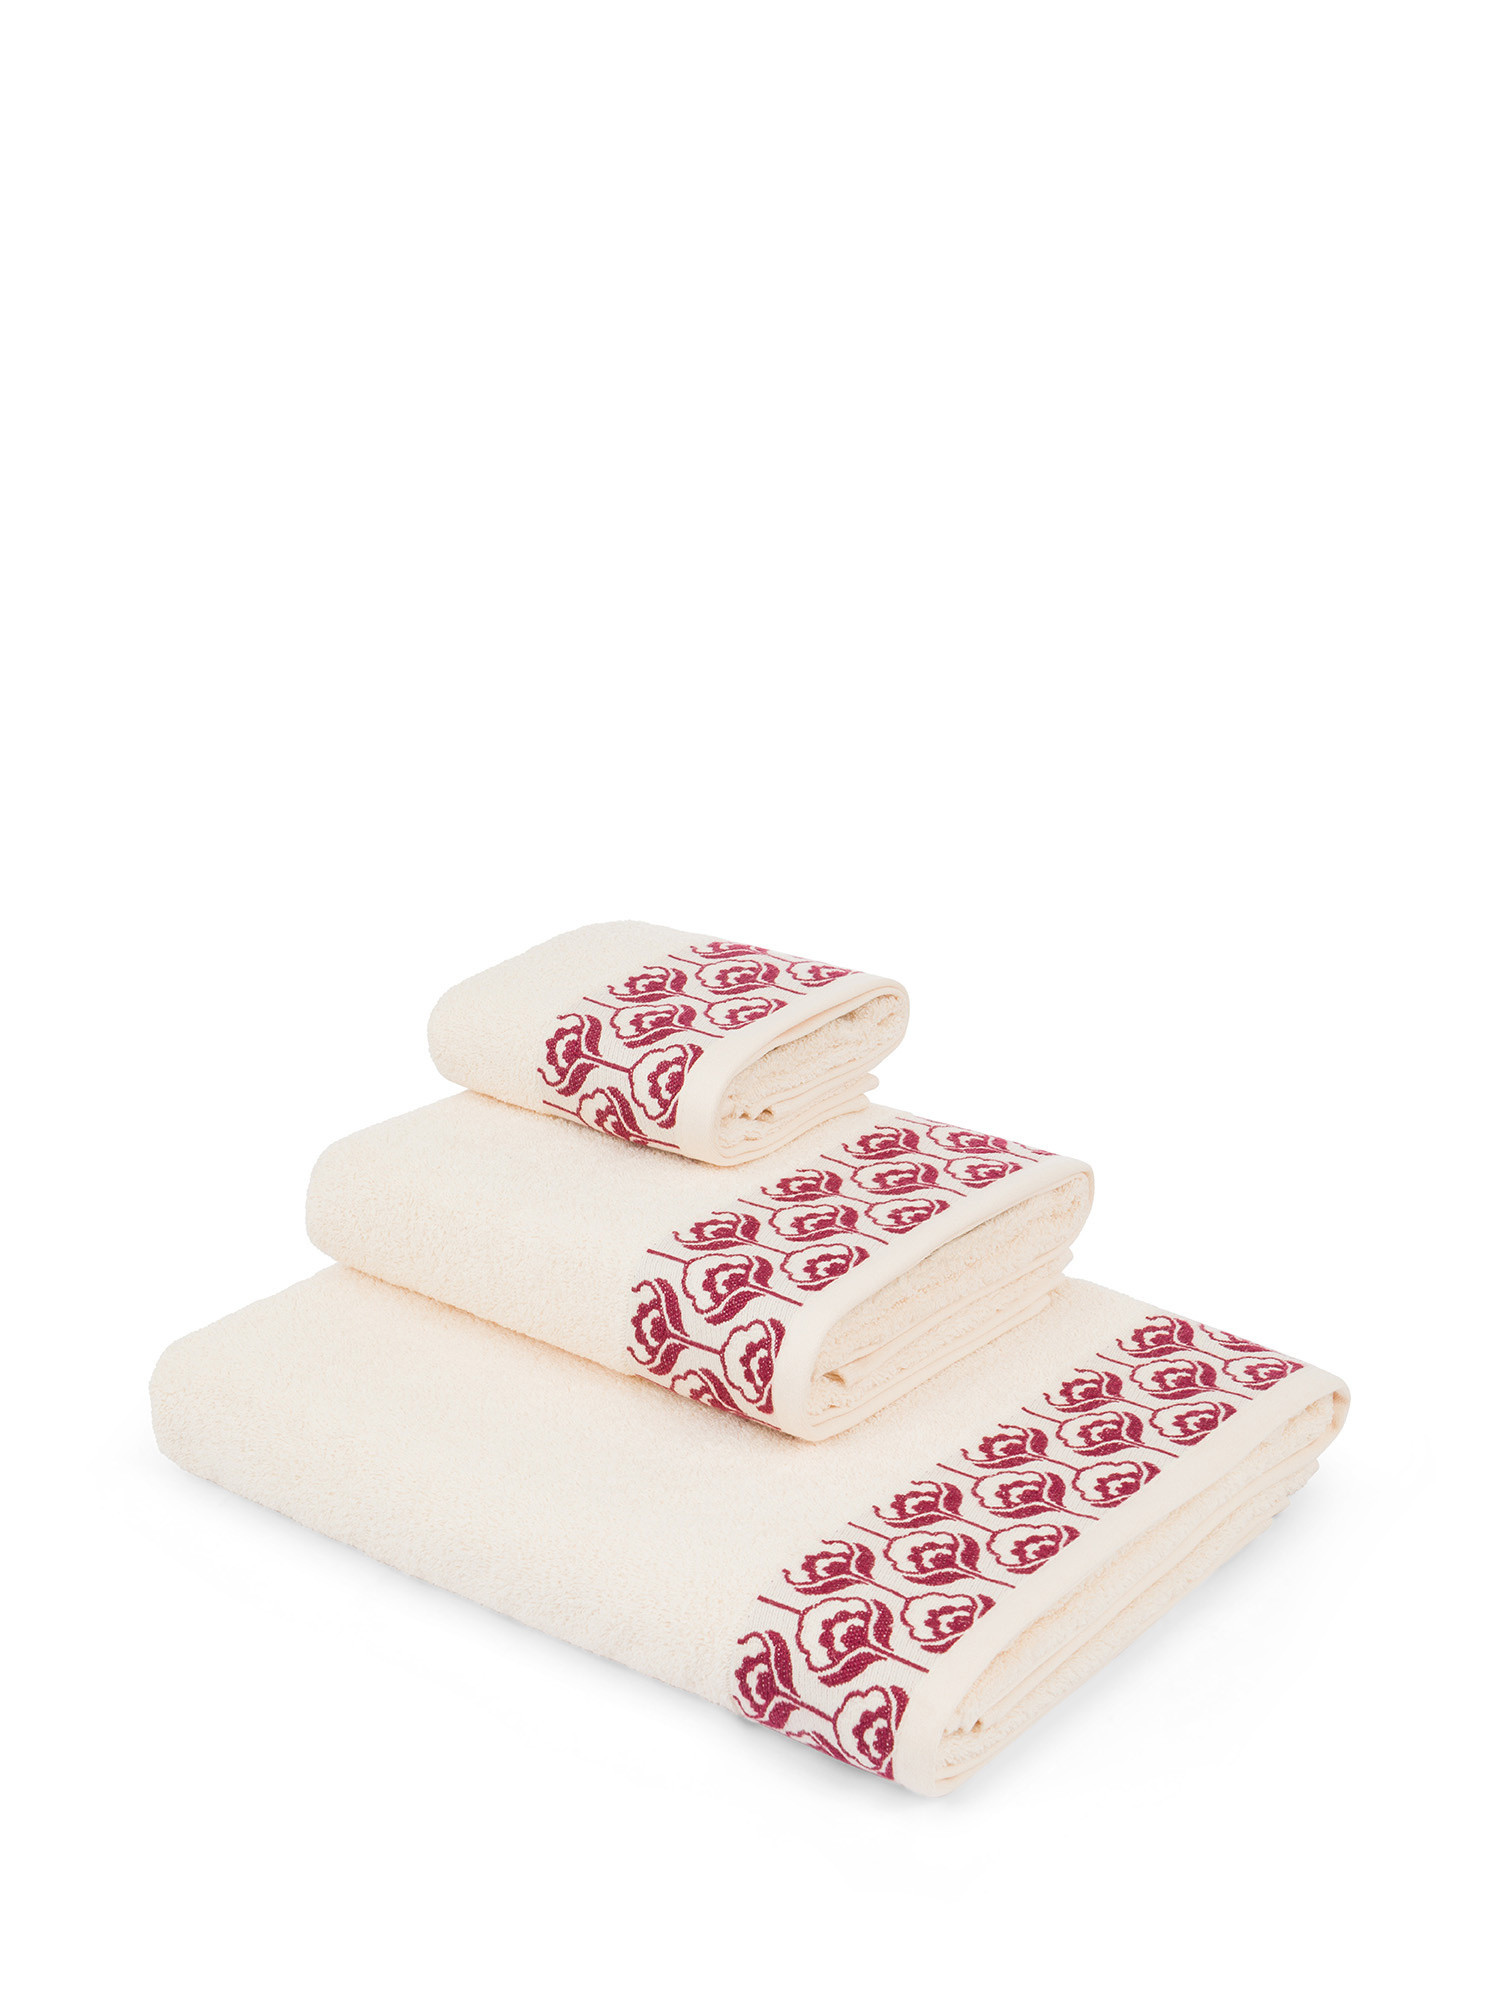 Asciugamano spugna di cotone motivo floreale, Crema, large image number 0